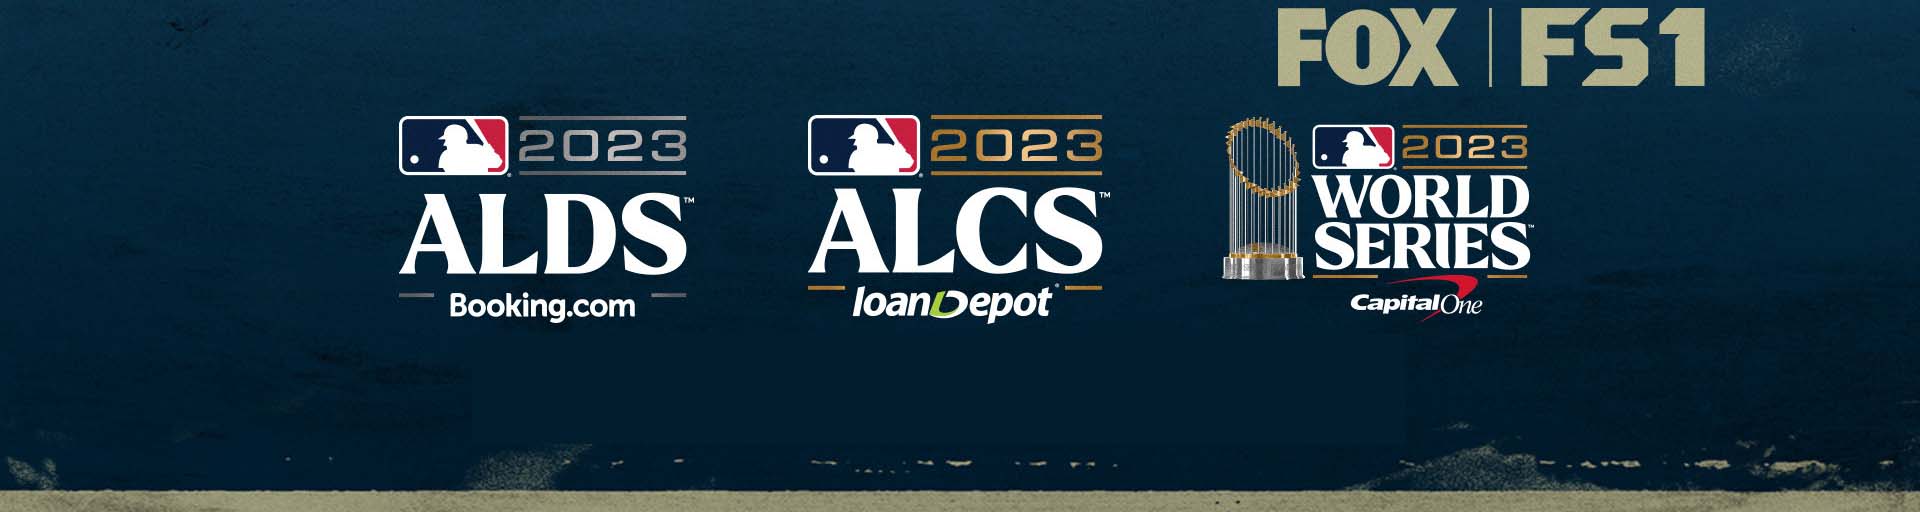 Orioles announce 2023 promotional schedule - Blog